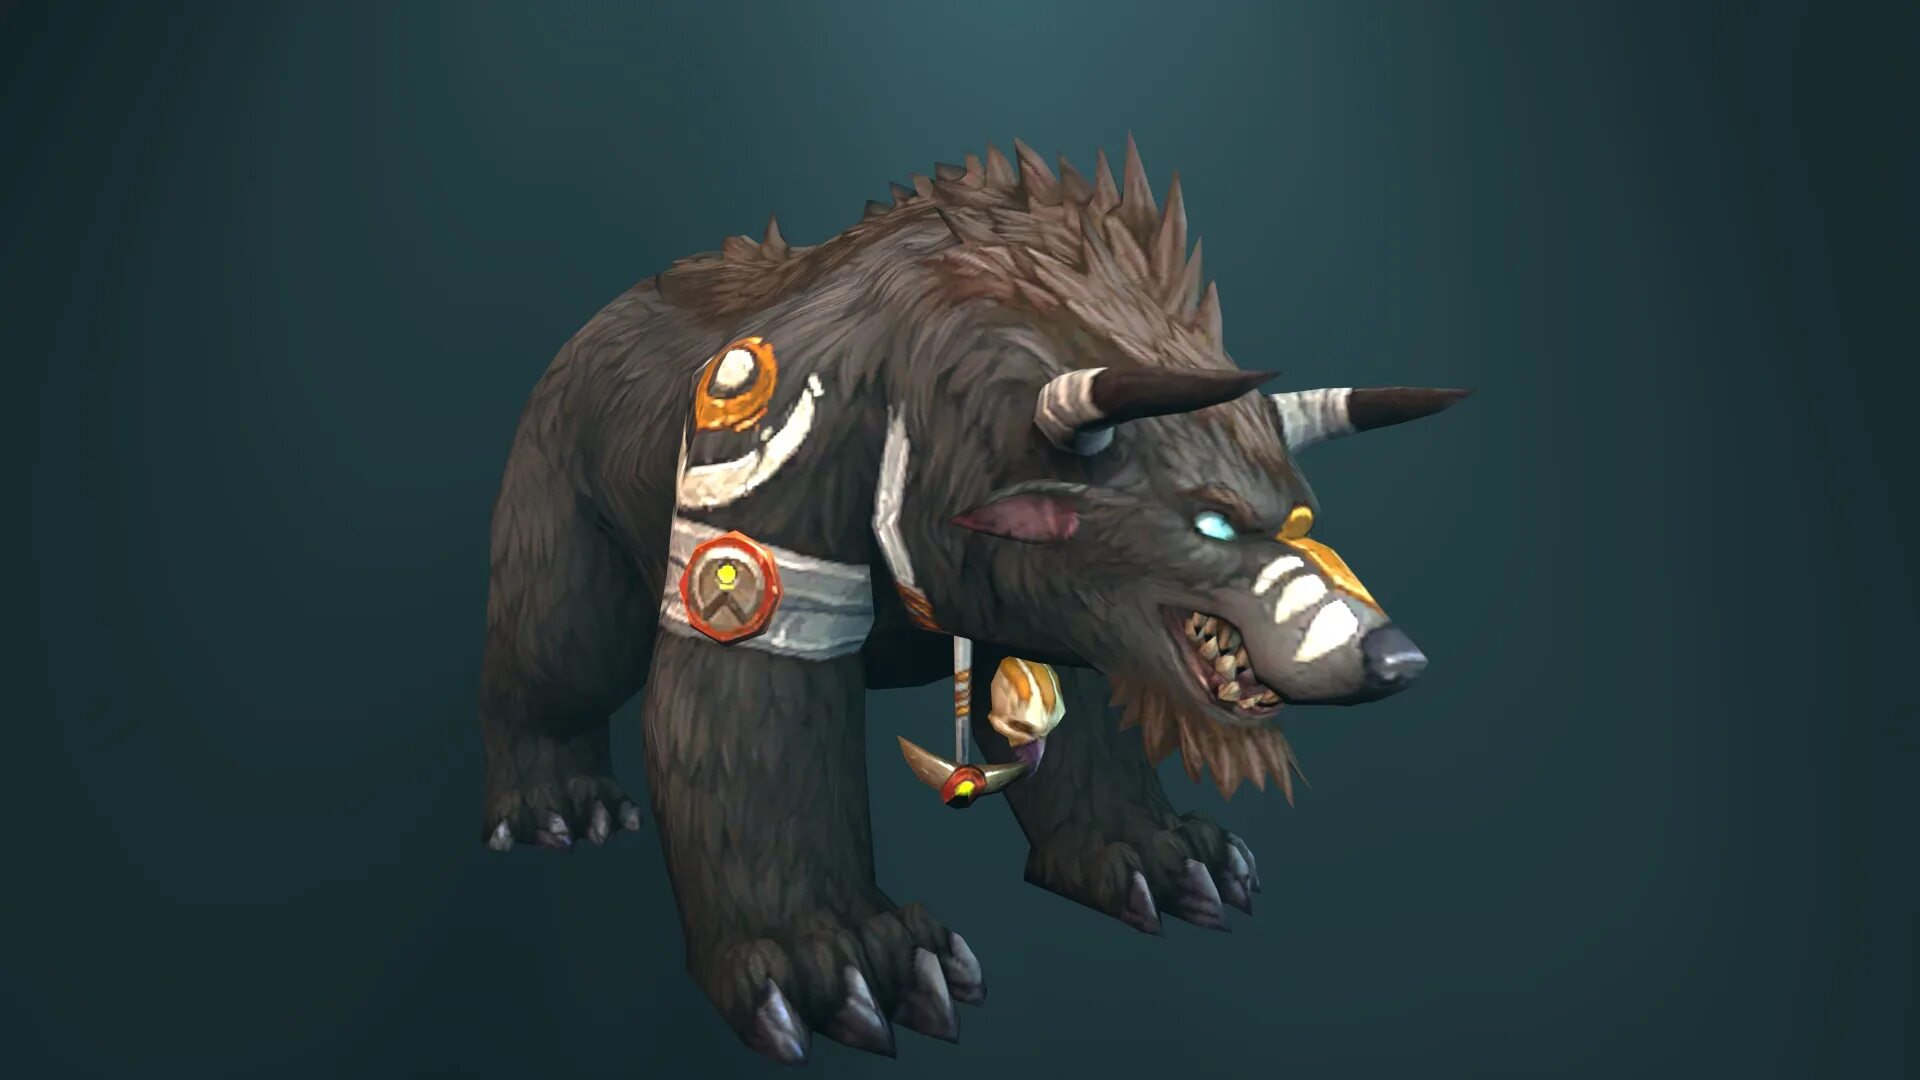 Bear form. Таурен друид медведь. ВОВ друид медведь таурен. Друид медведь варкрафт 3. Warcraft друид медведь.